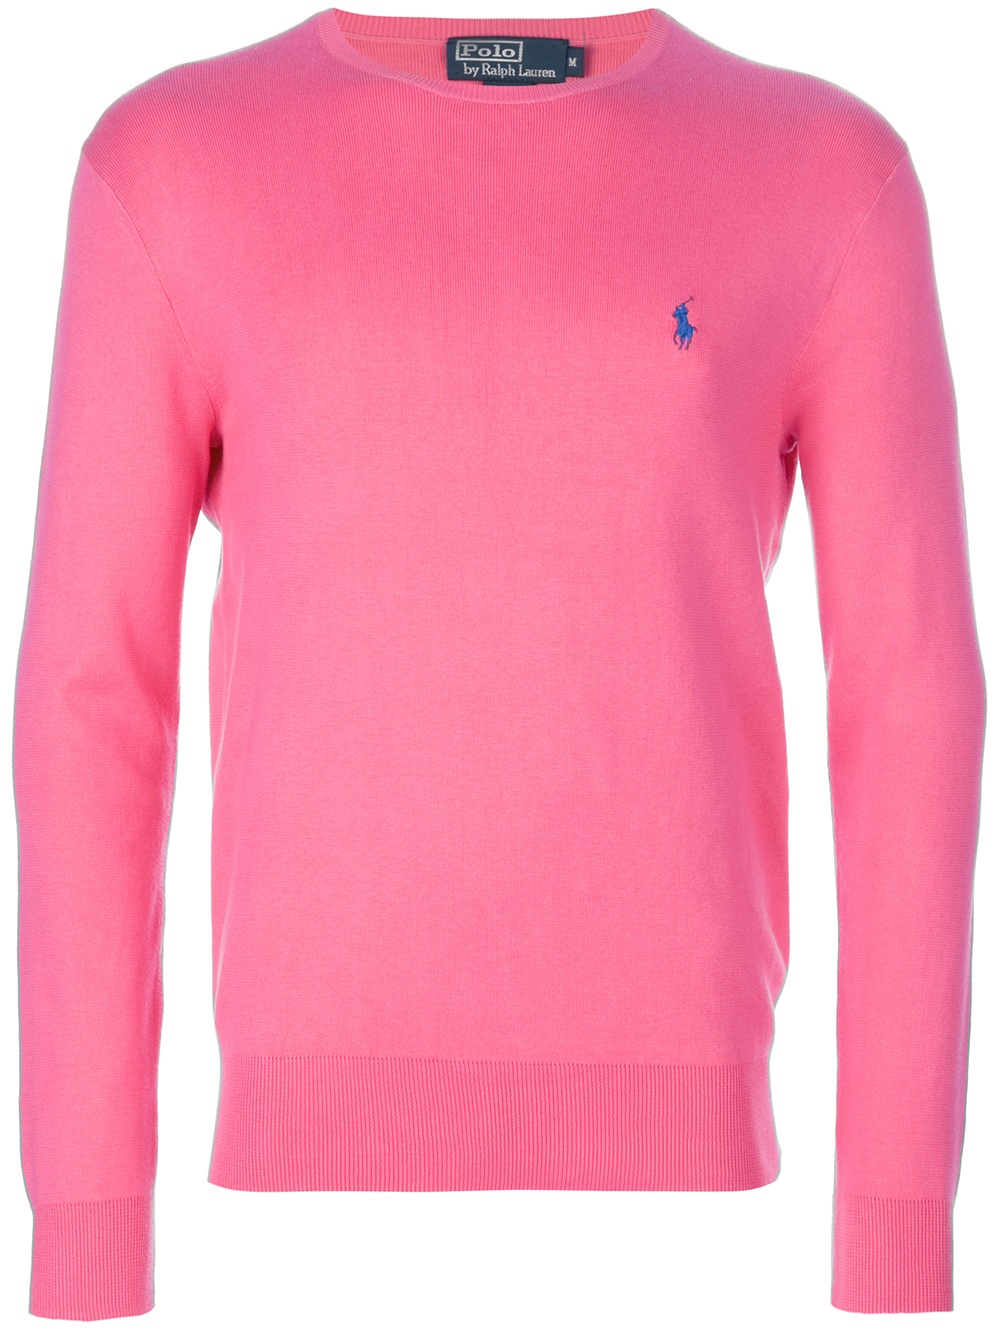 Polo Ralph Lauren Crew Neck Sweater in Pink & Purple (Pink) for Men - Lyst